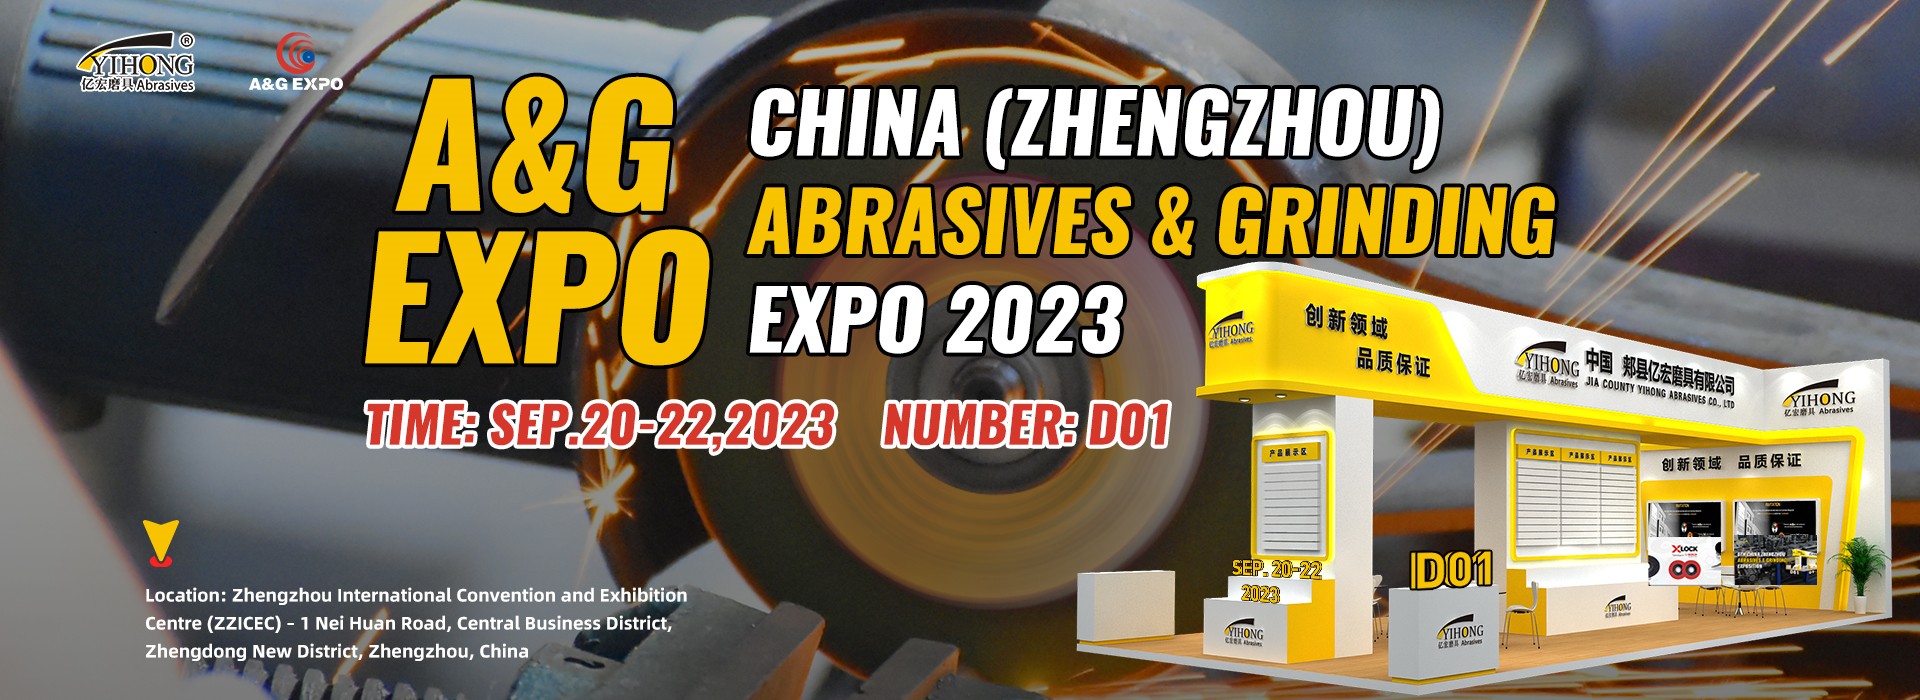 China Abrasives & Grinding Expo 2023